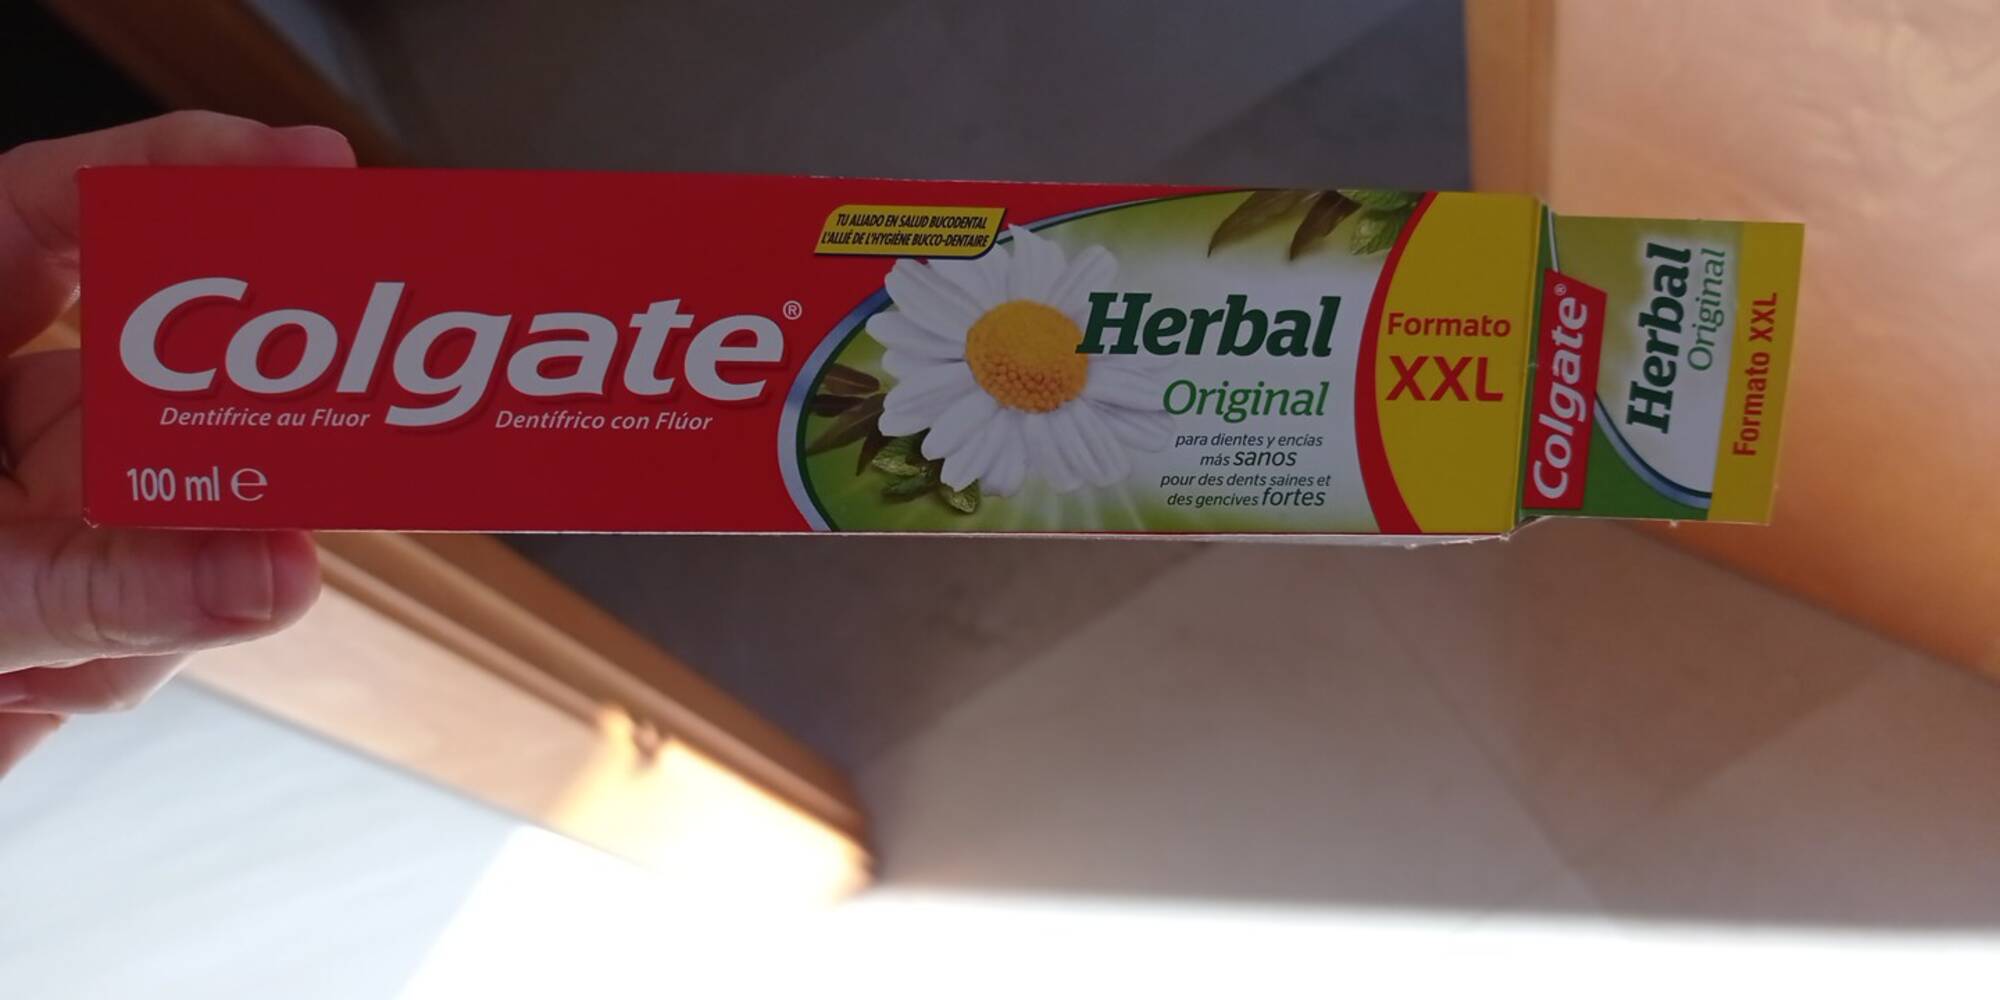 COLGATE - Herbal original - Dentifrice au fluor